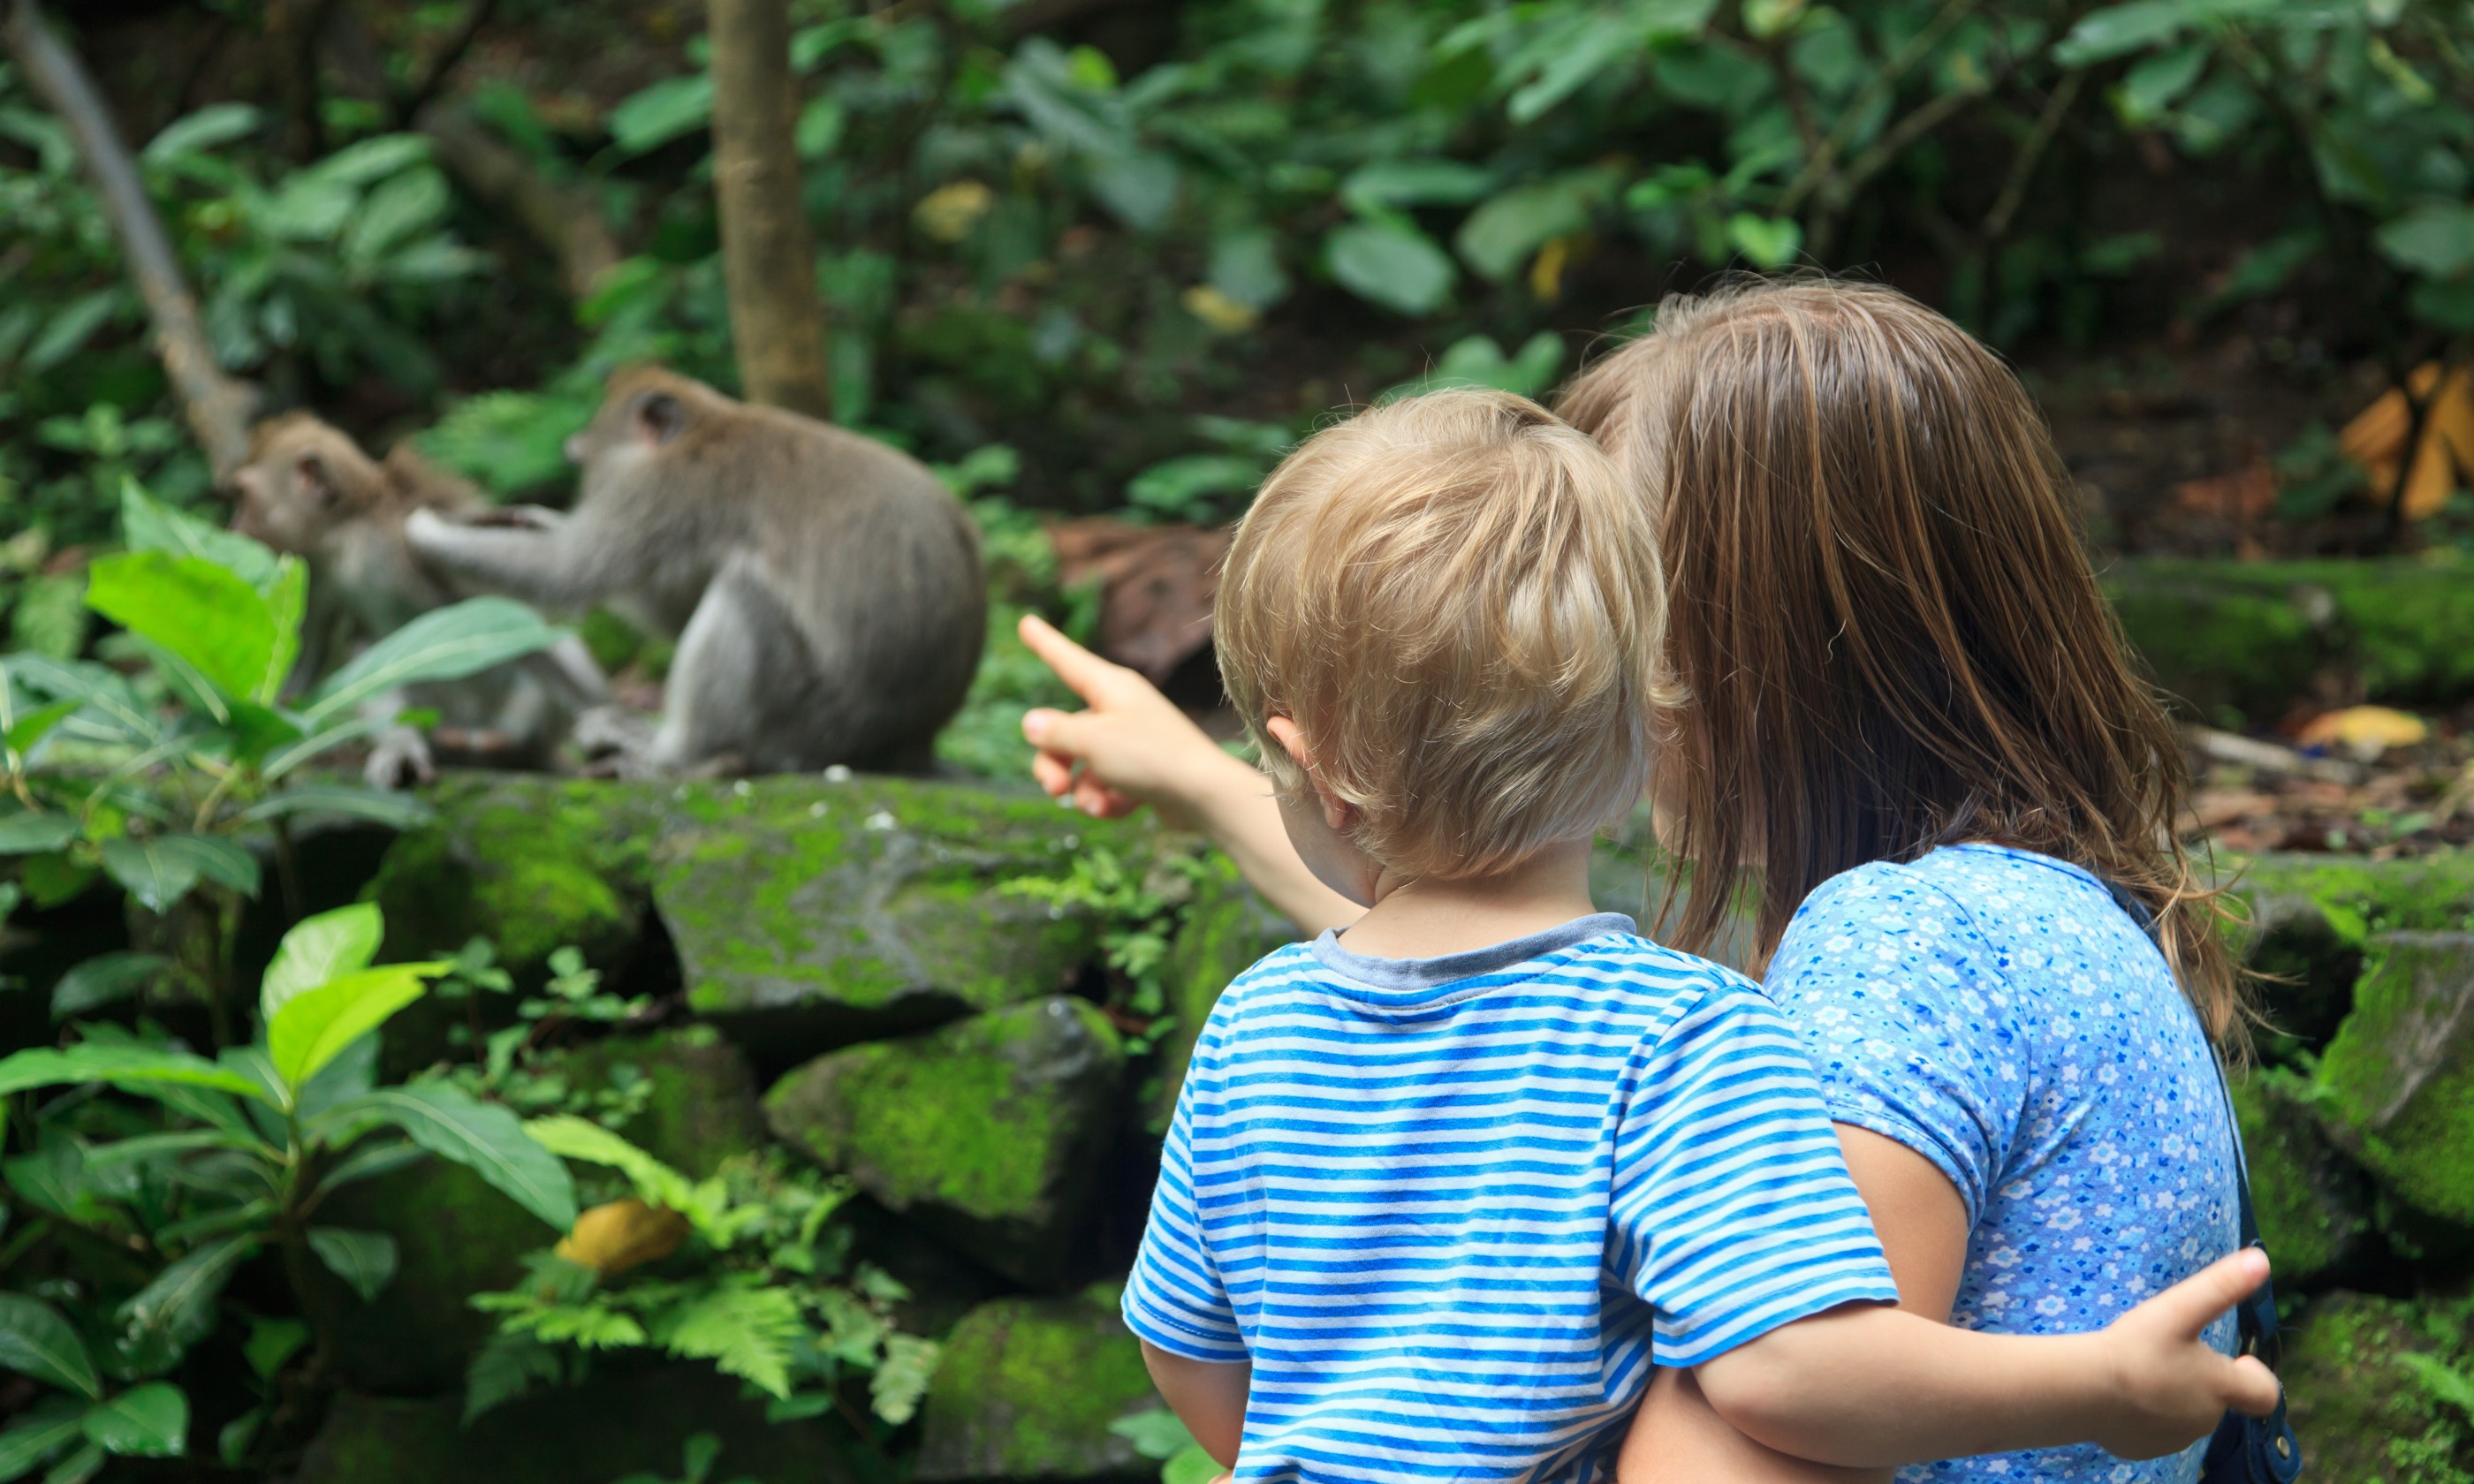 Child watching monkeys in the wild (Shutterstock.com. See main credit below)